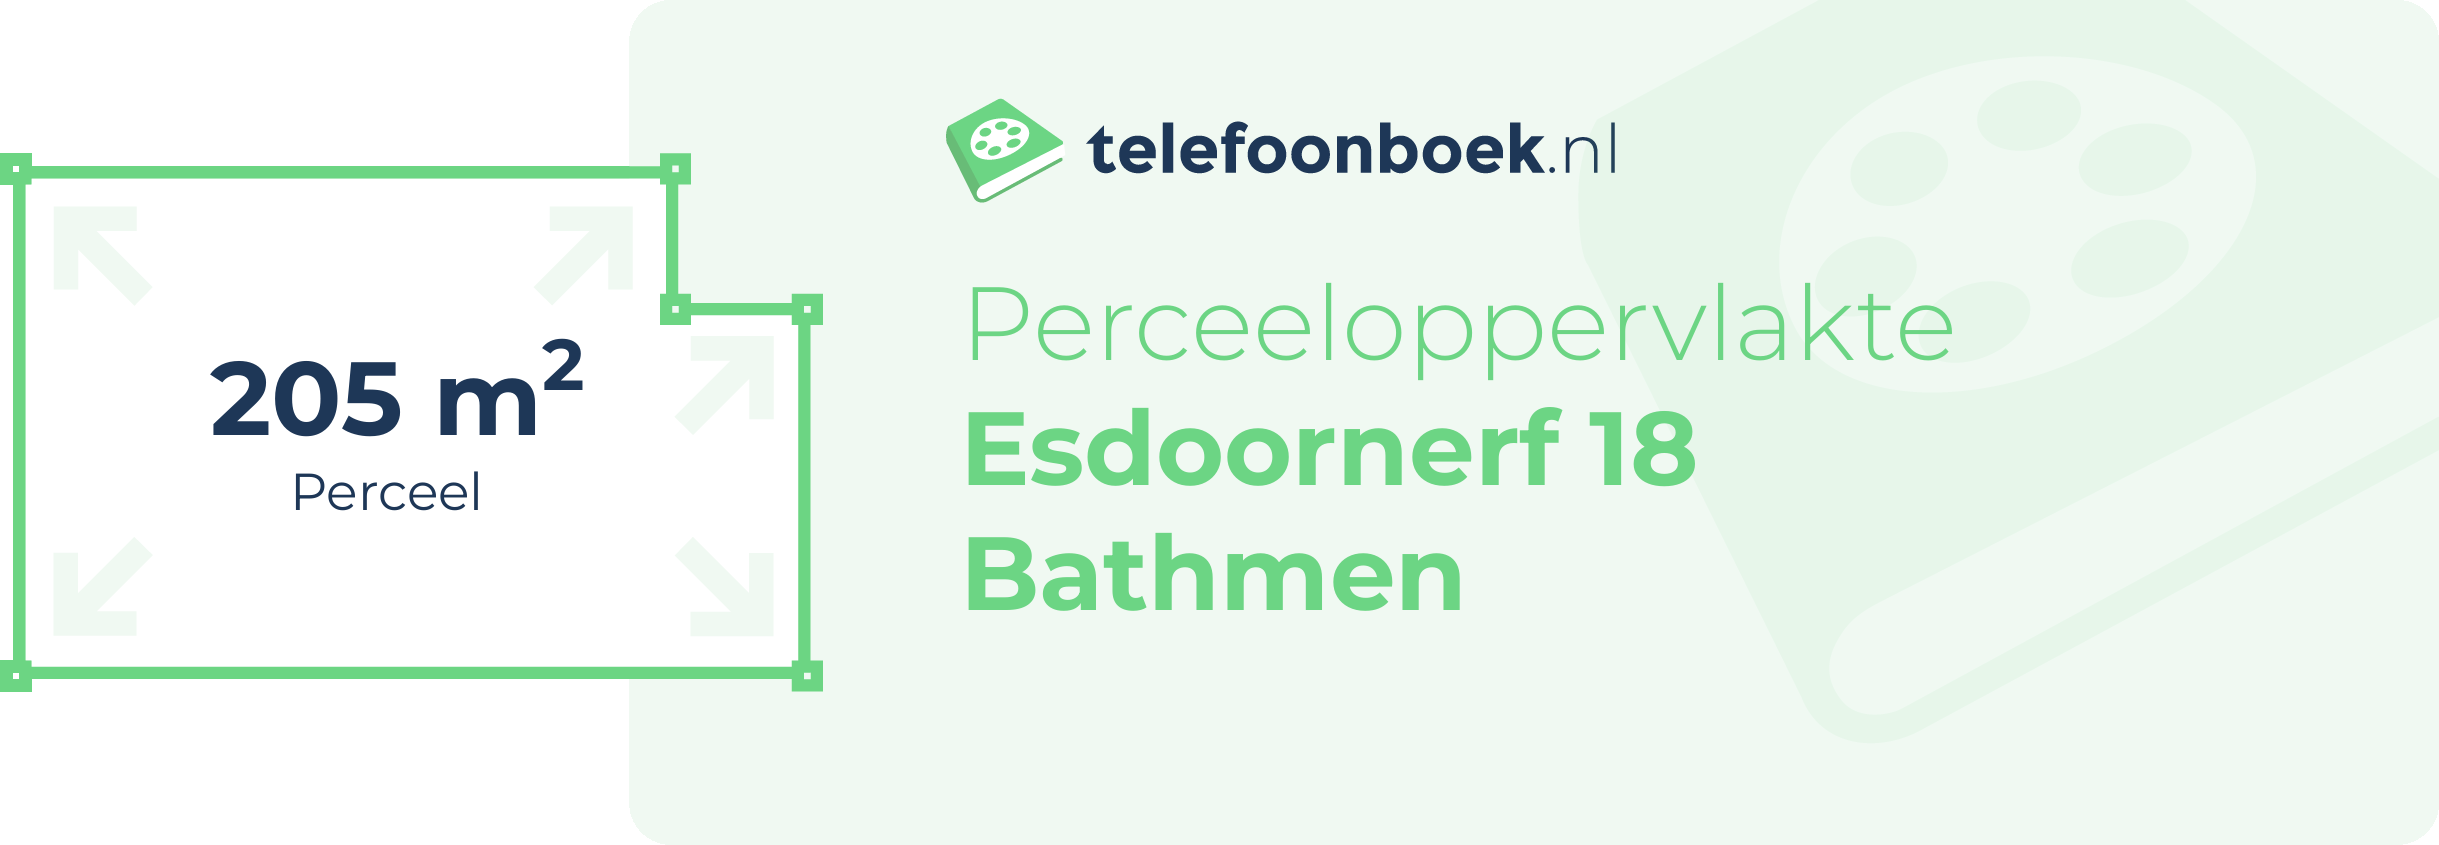 Perceeloppervlakte Esdoornerf 18 Bathmen